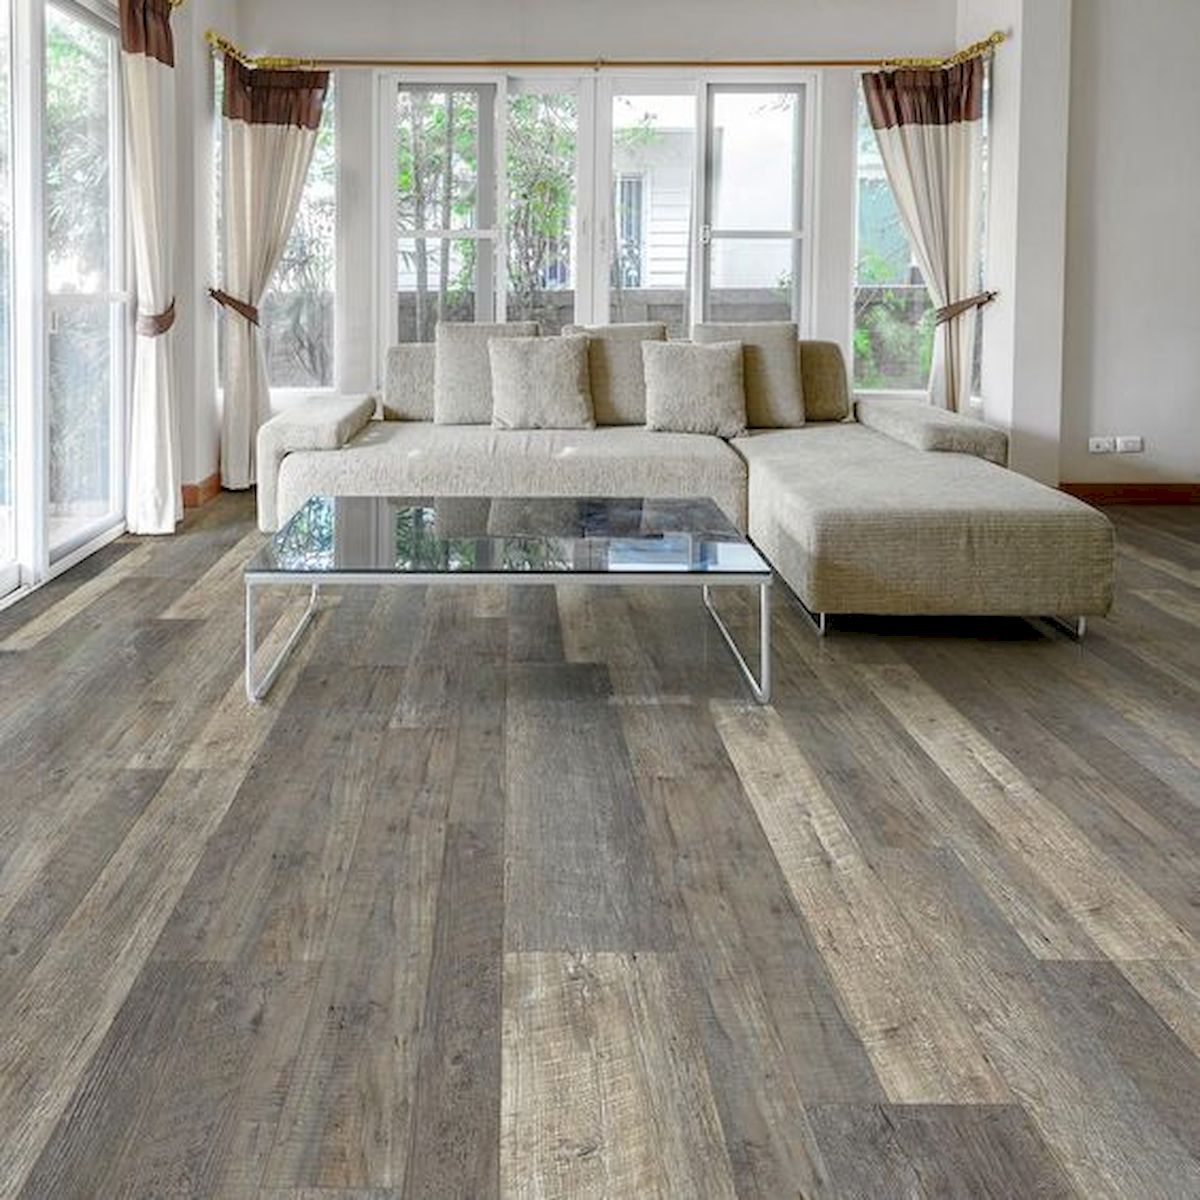 80 Gorgeous Hardwood Floor Ideas For Interior Home (26)